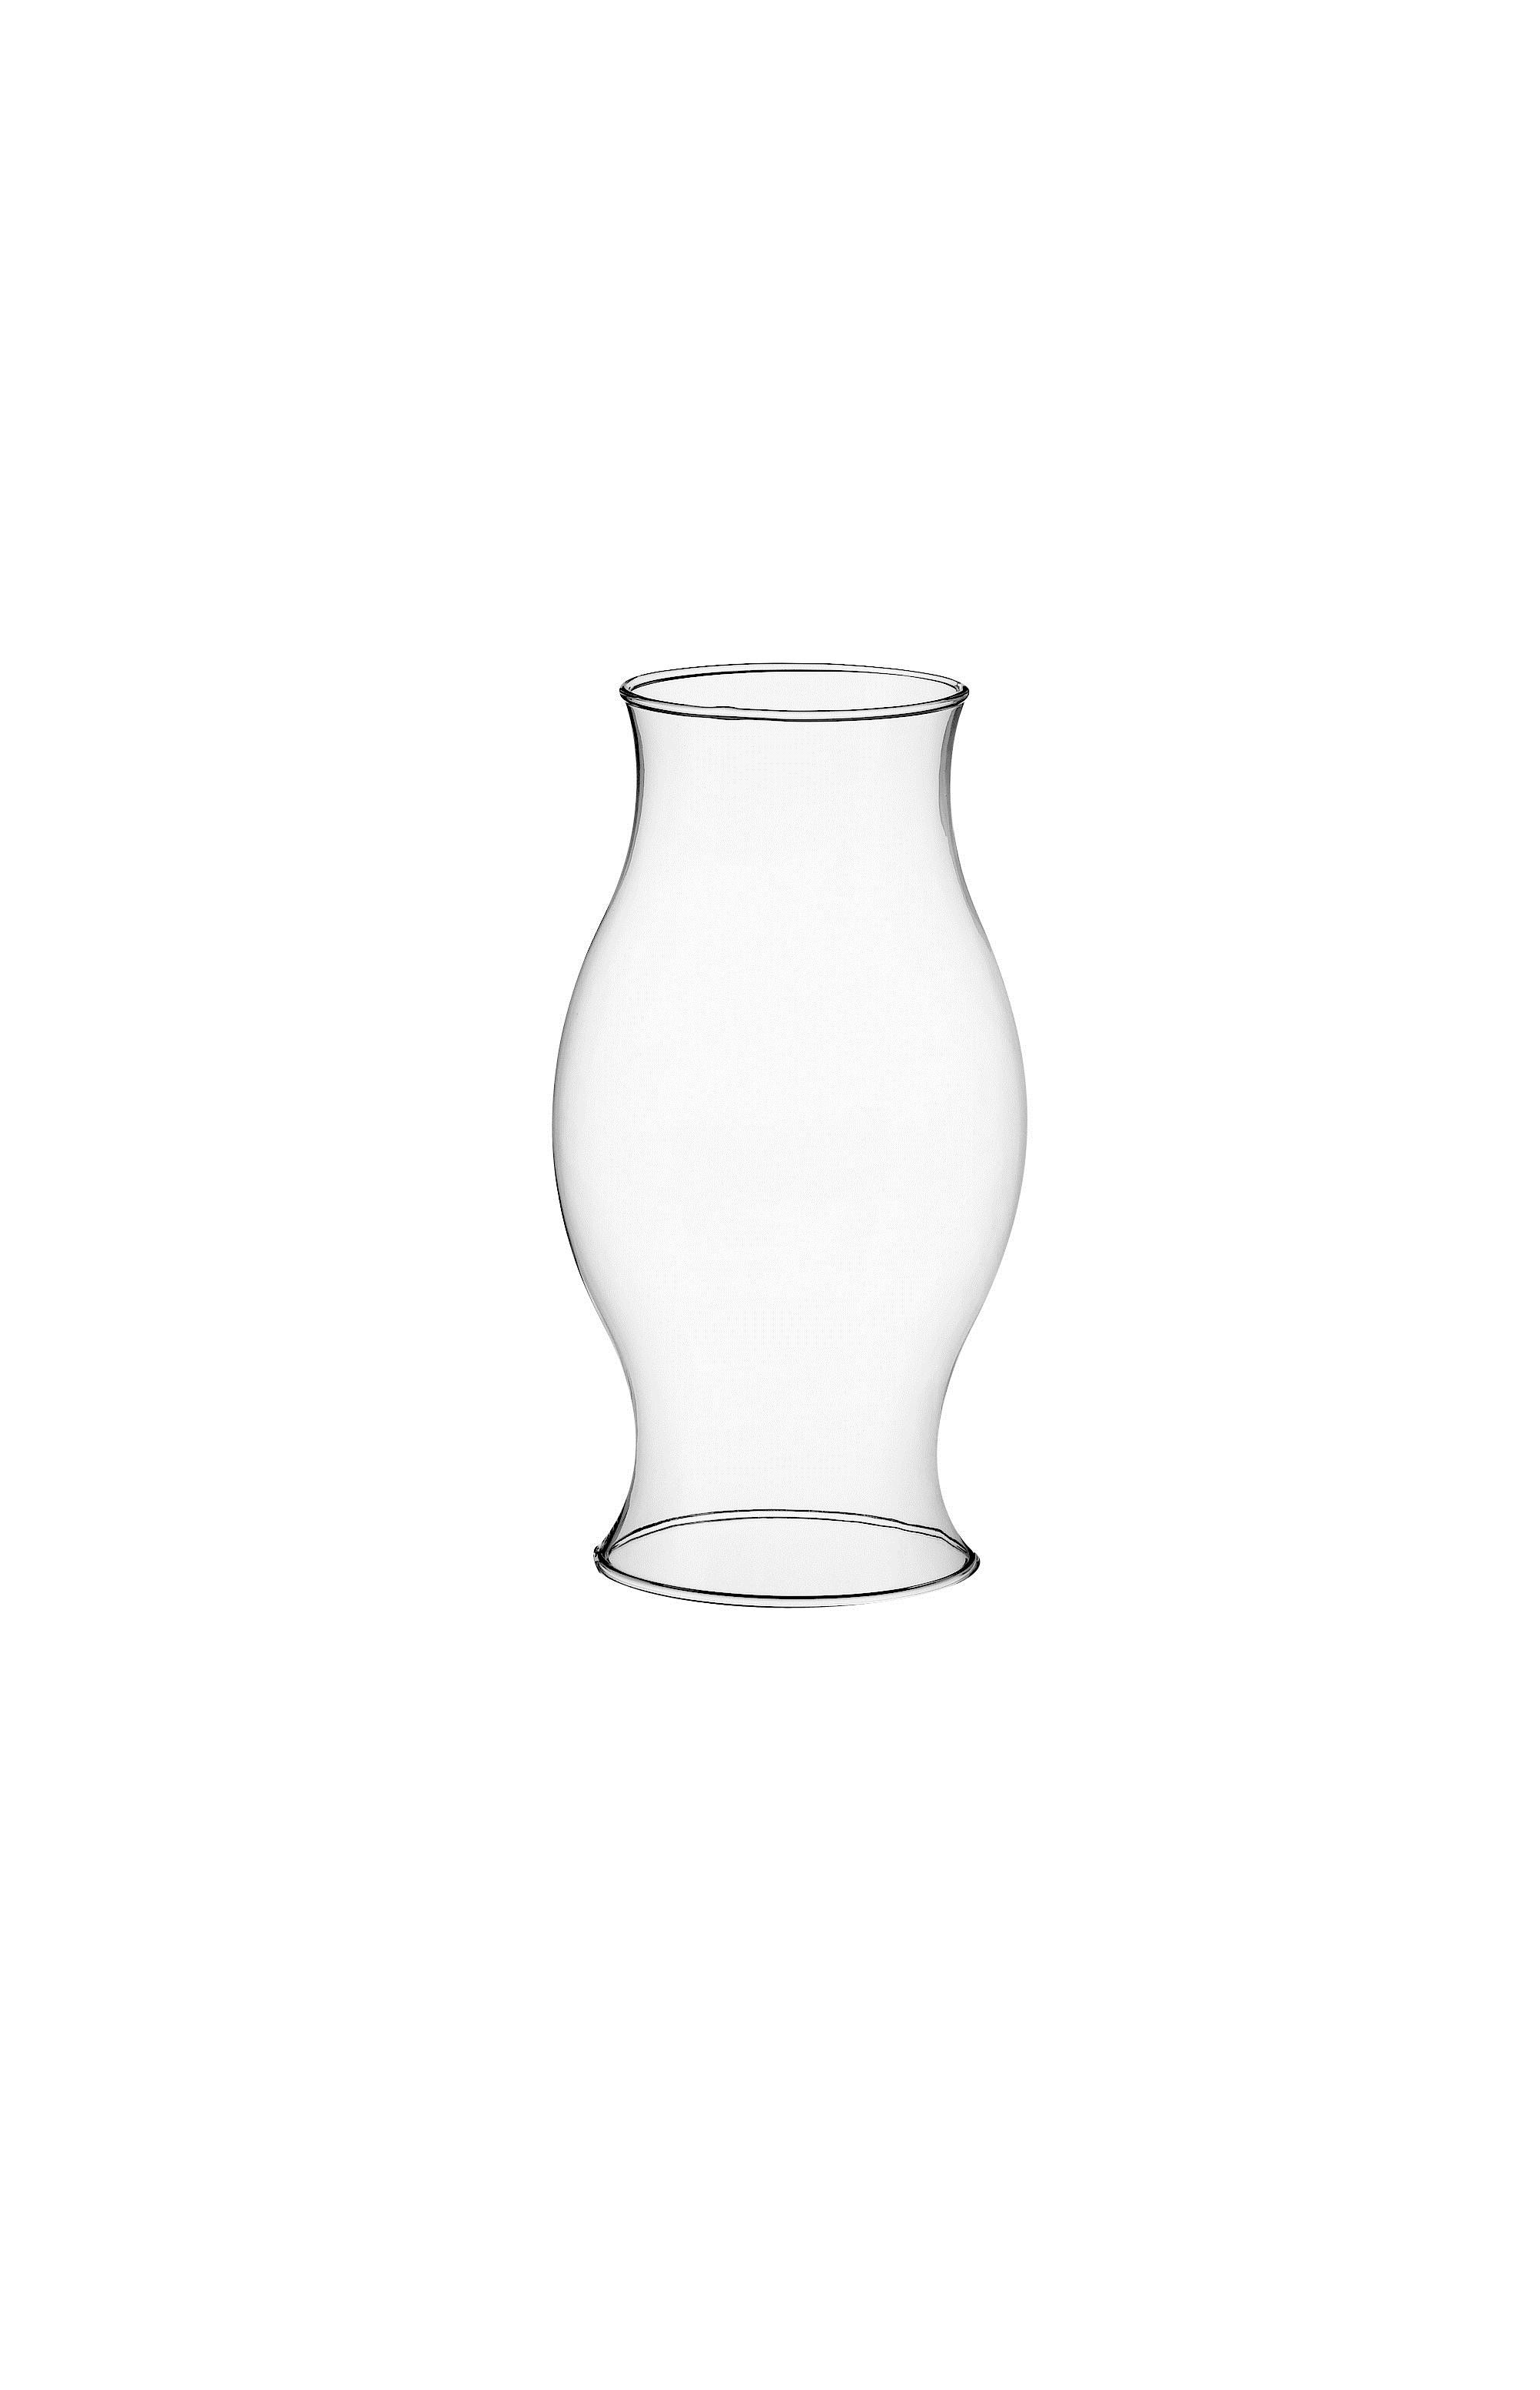 15 Wonderful Clear Glass Balloon Vase 2024 free download clear glass balloon vase of perri farms with vase hurricane glass 6 clear 4 5 op pk 4